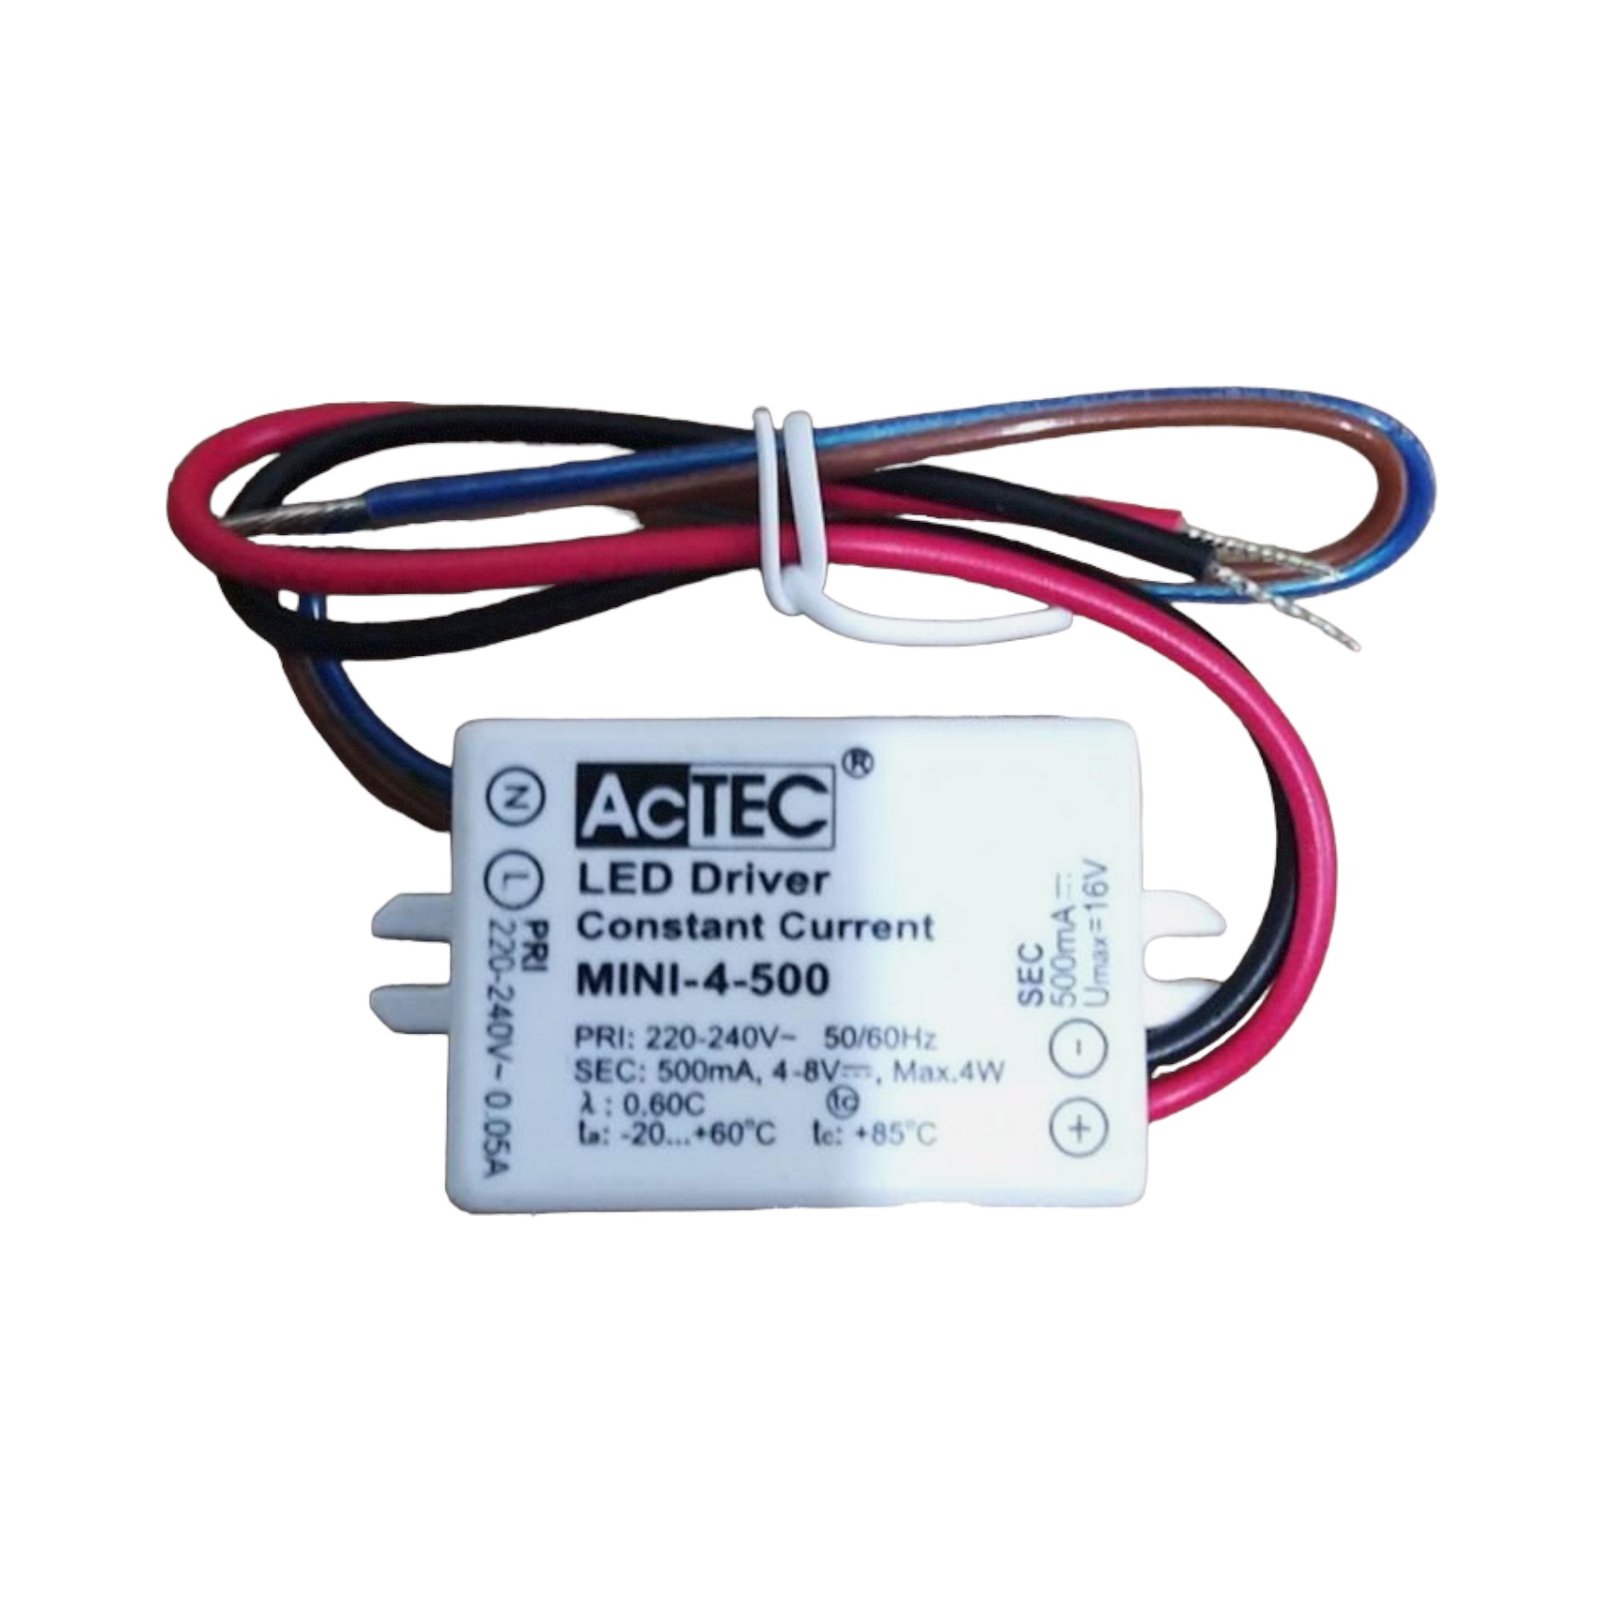 AcTEC Mini driver LED CC 500mA, 4 W, IP65